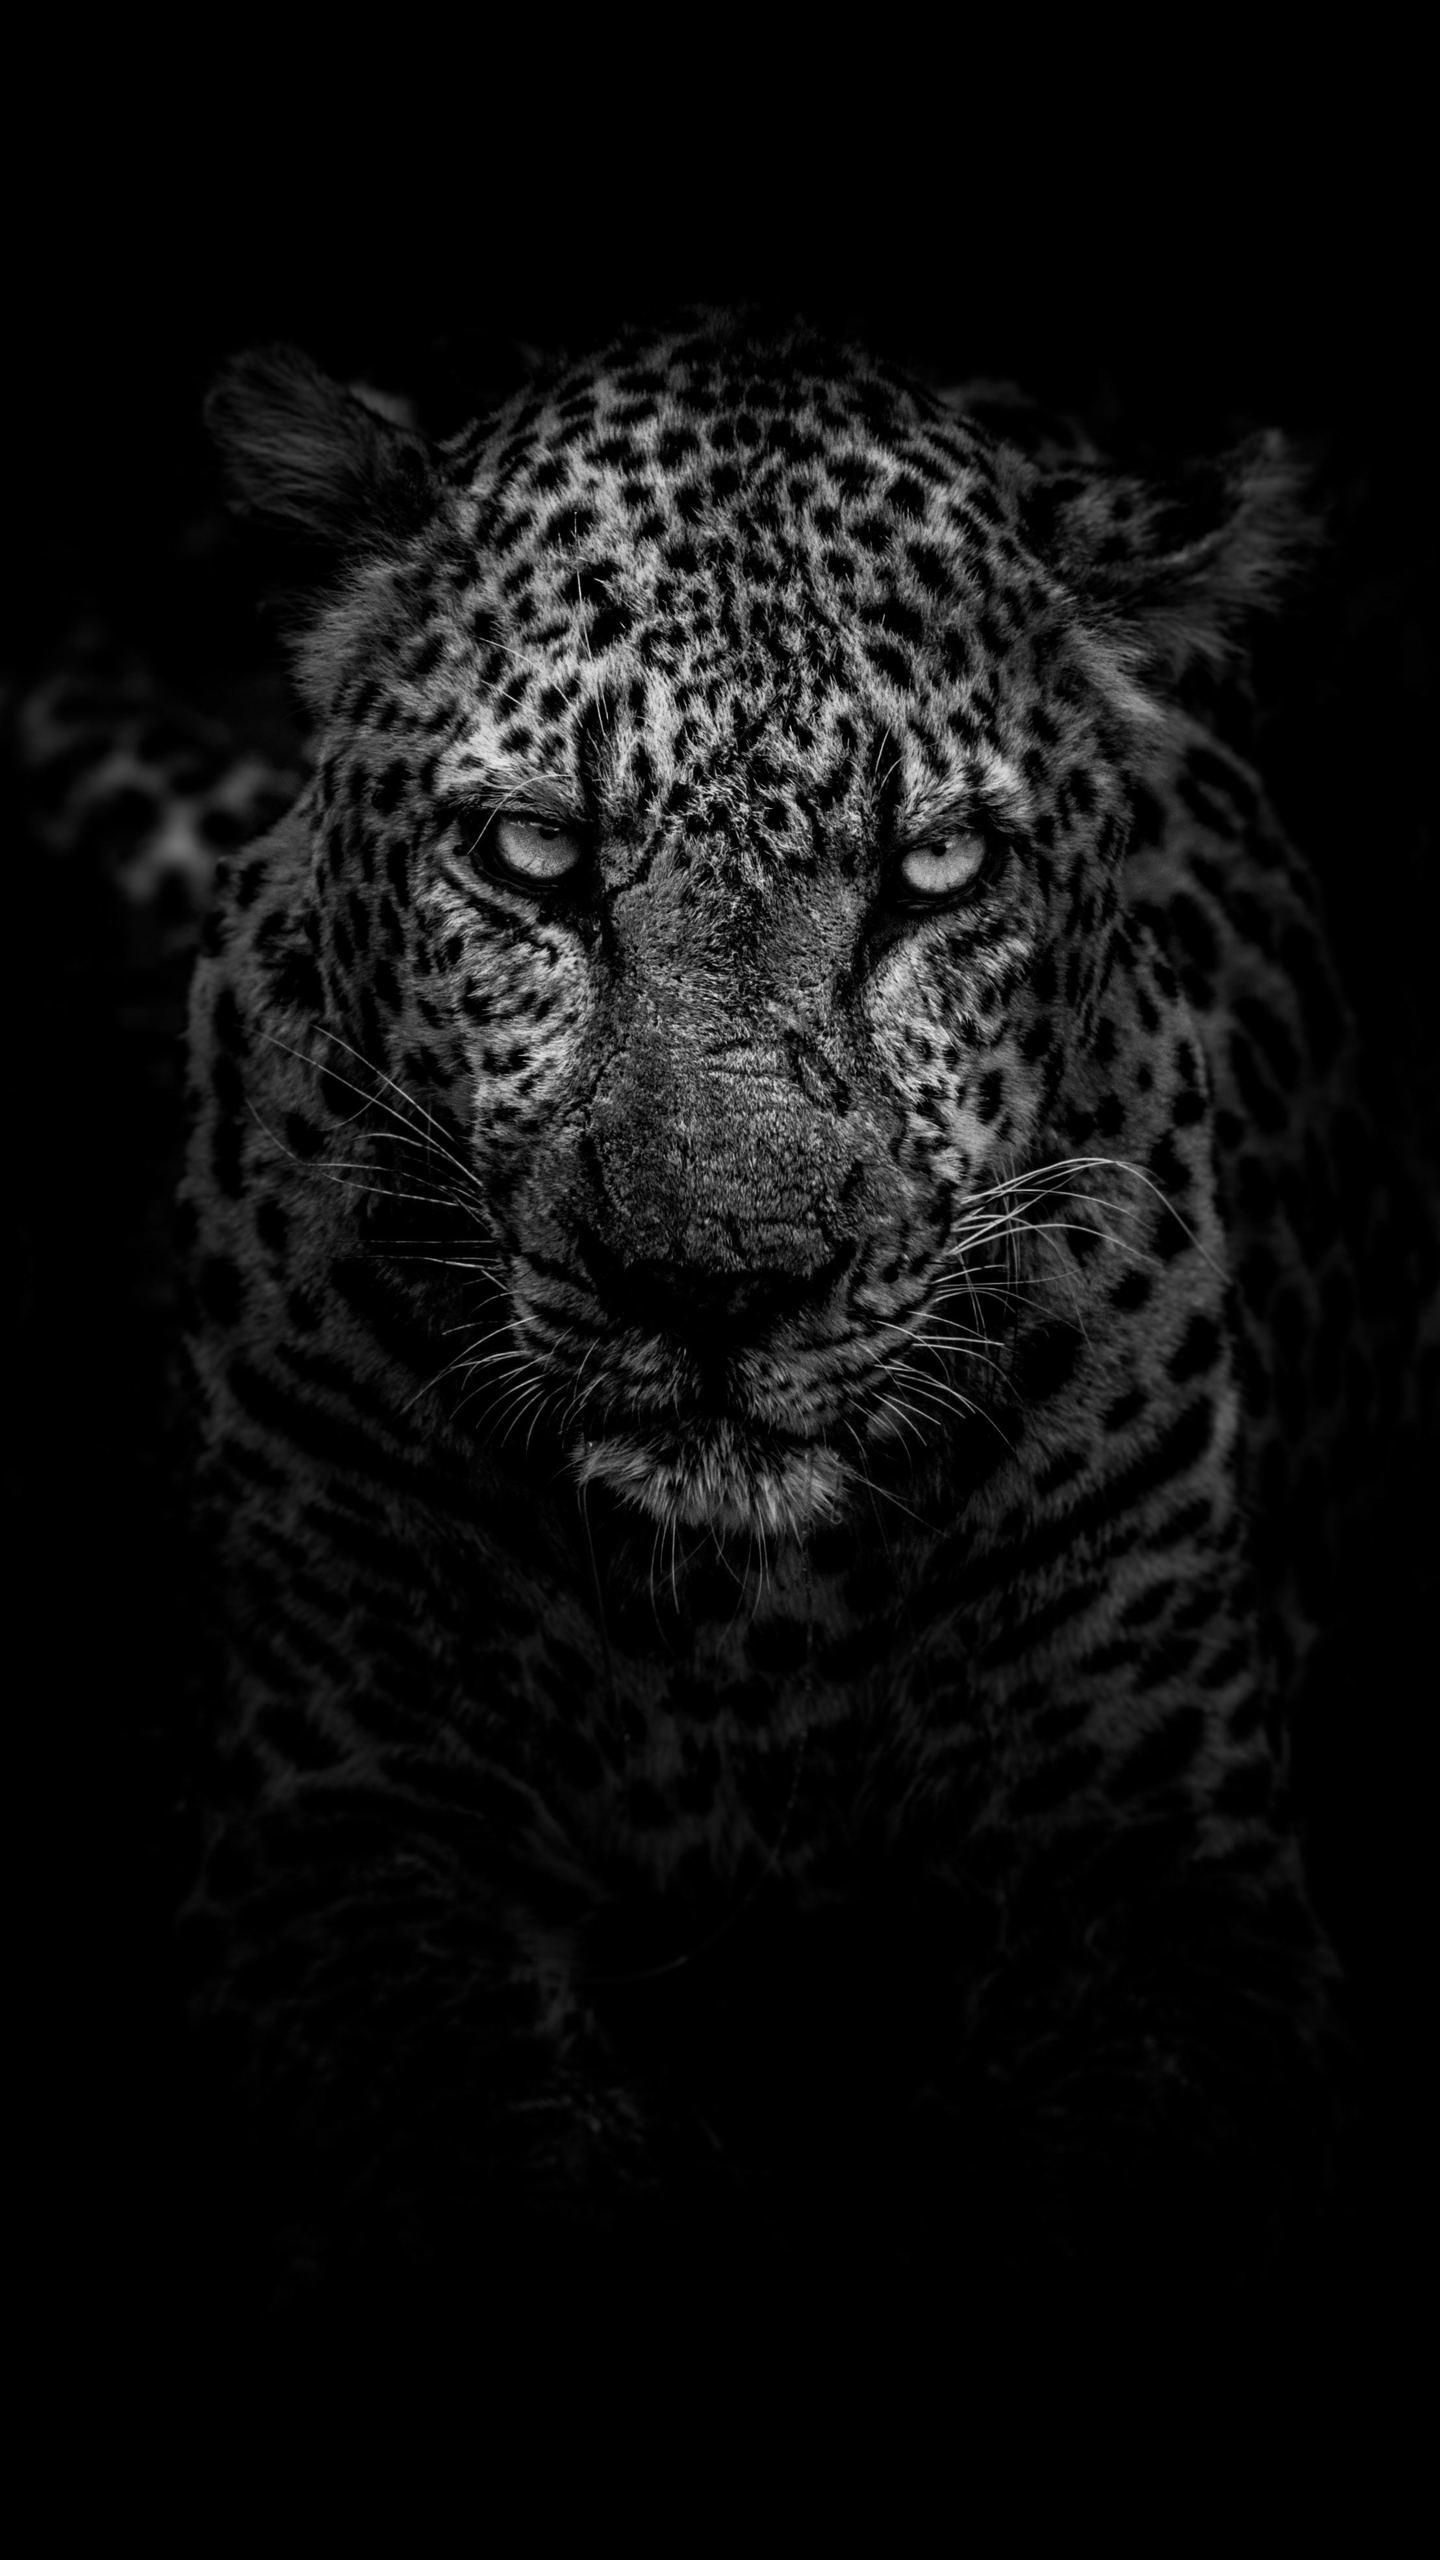 Leopard Dark Monochrome 5K, HD Animals Wallpaper Photo and Picture. Leopard wallpaper, Animal wallpaper, Tiger wallpaper